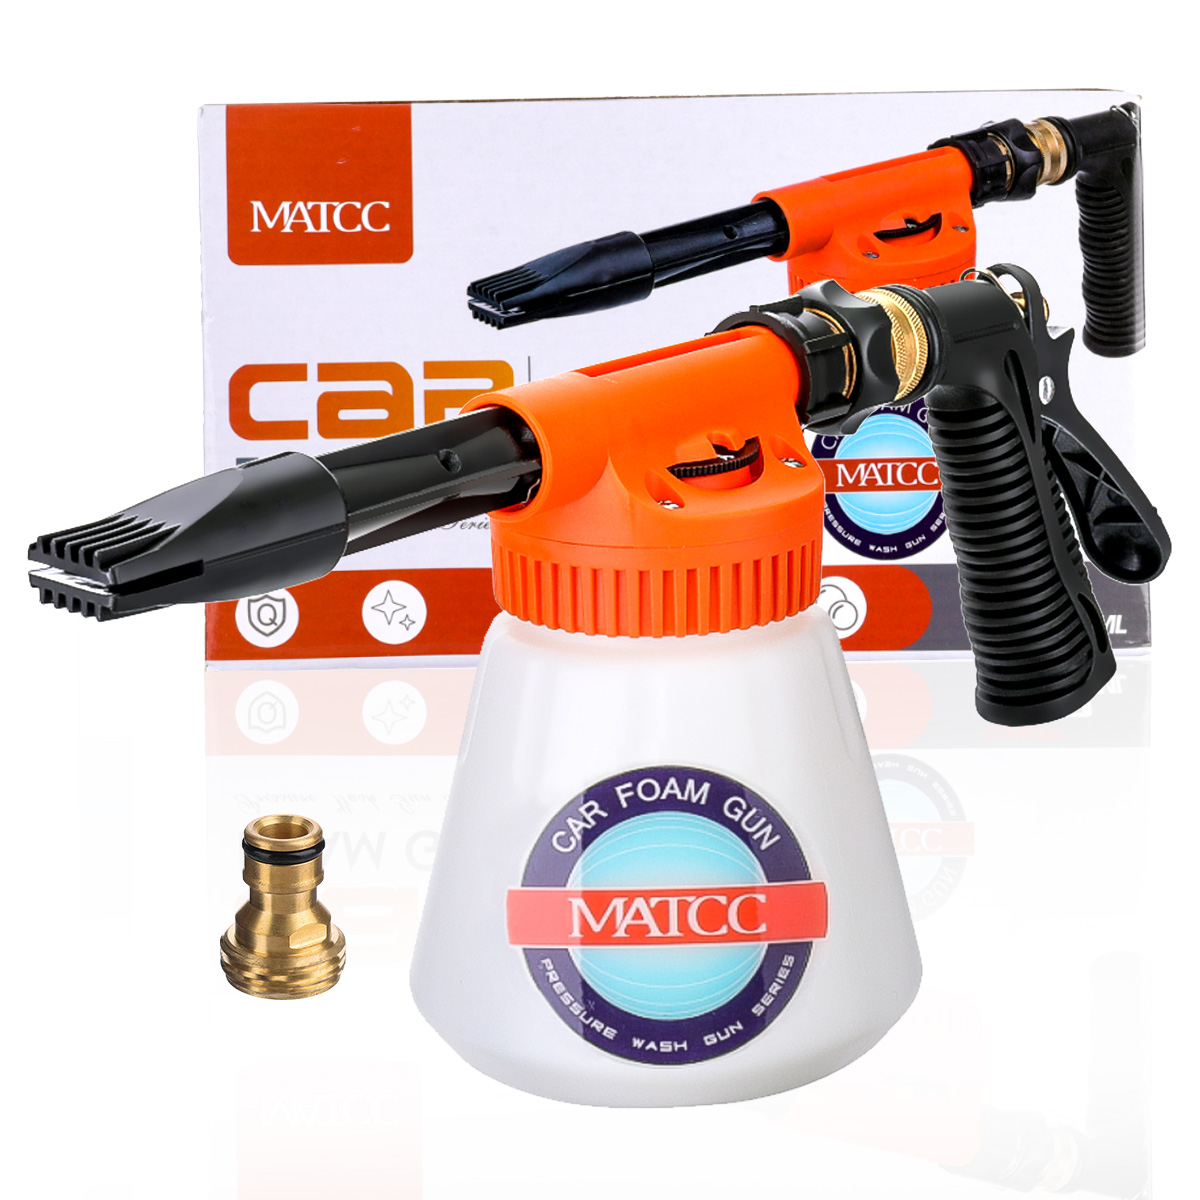 MATCC-Auto-Foam-Car-Wash-Tool-Foam-and-Adjustable-Car-Wash-Sprayer-with-Adjustment-Ratio-Dial-Spraye-1388324-10